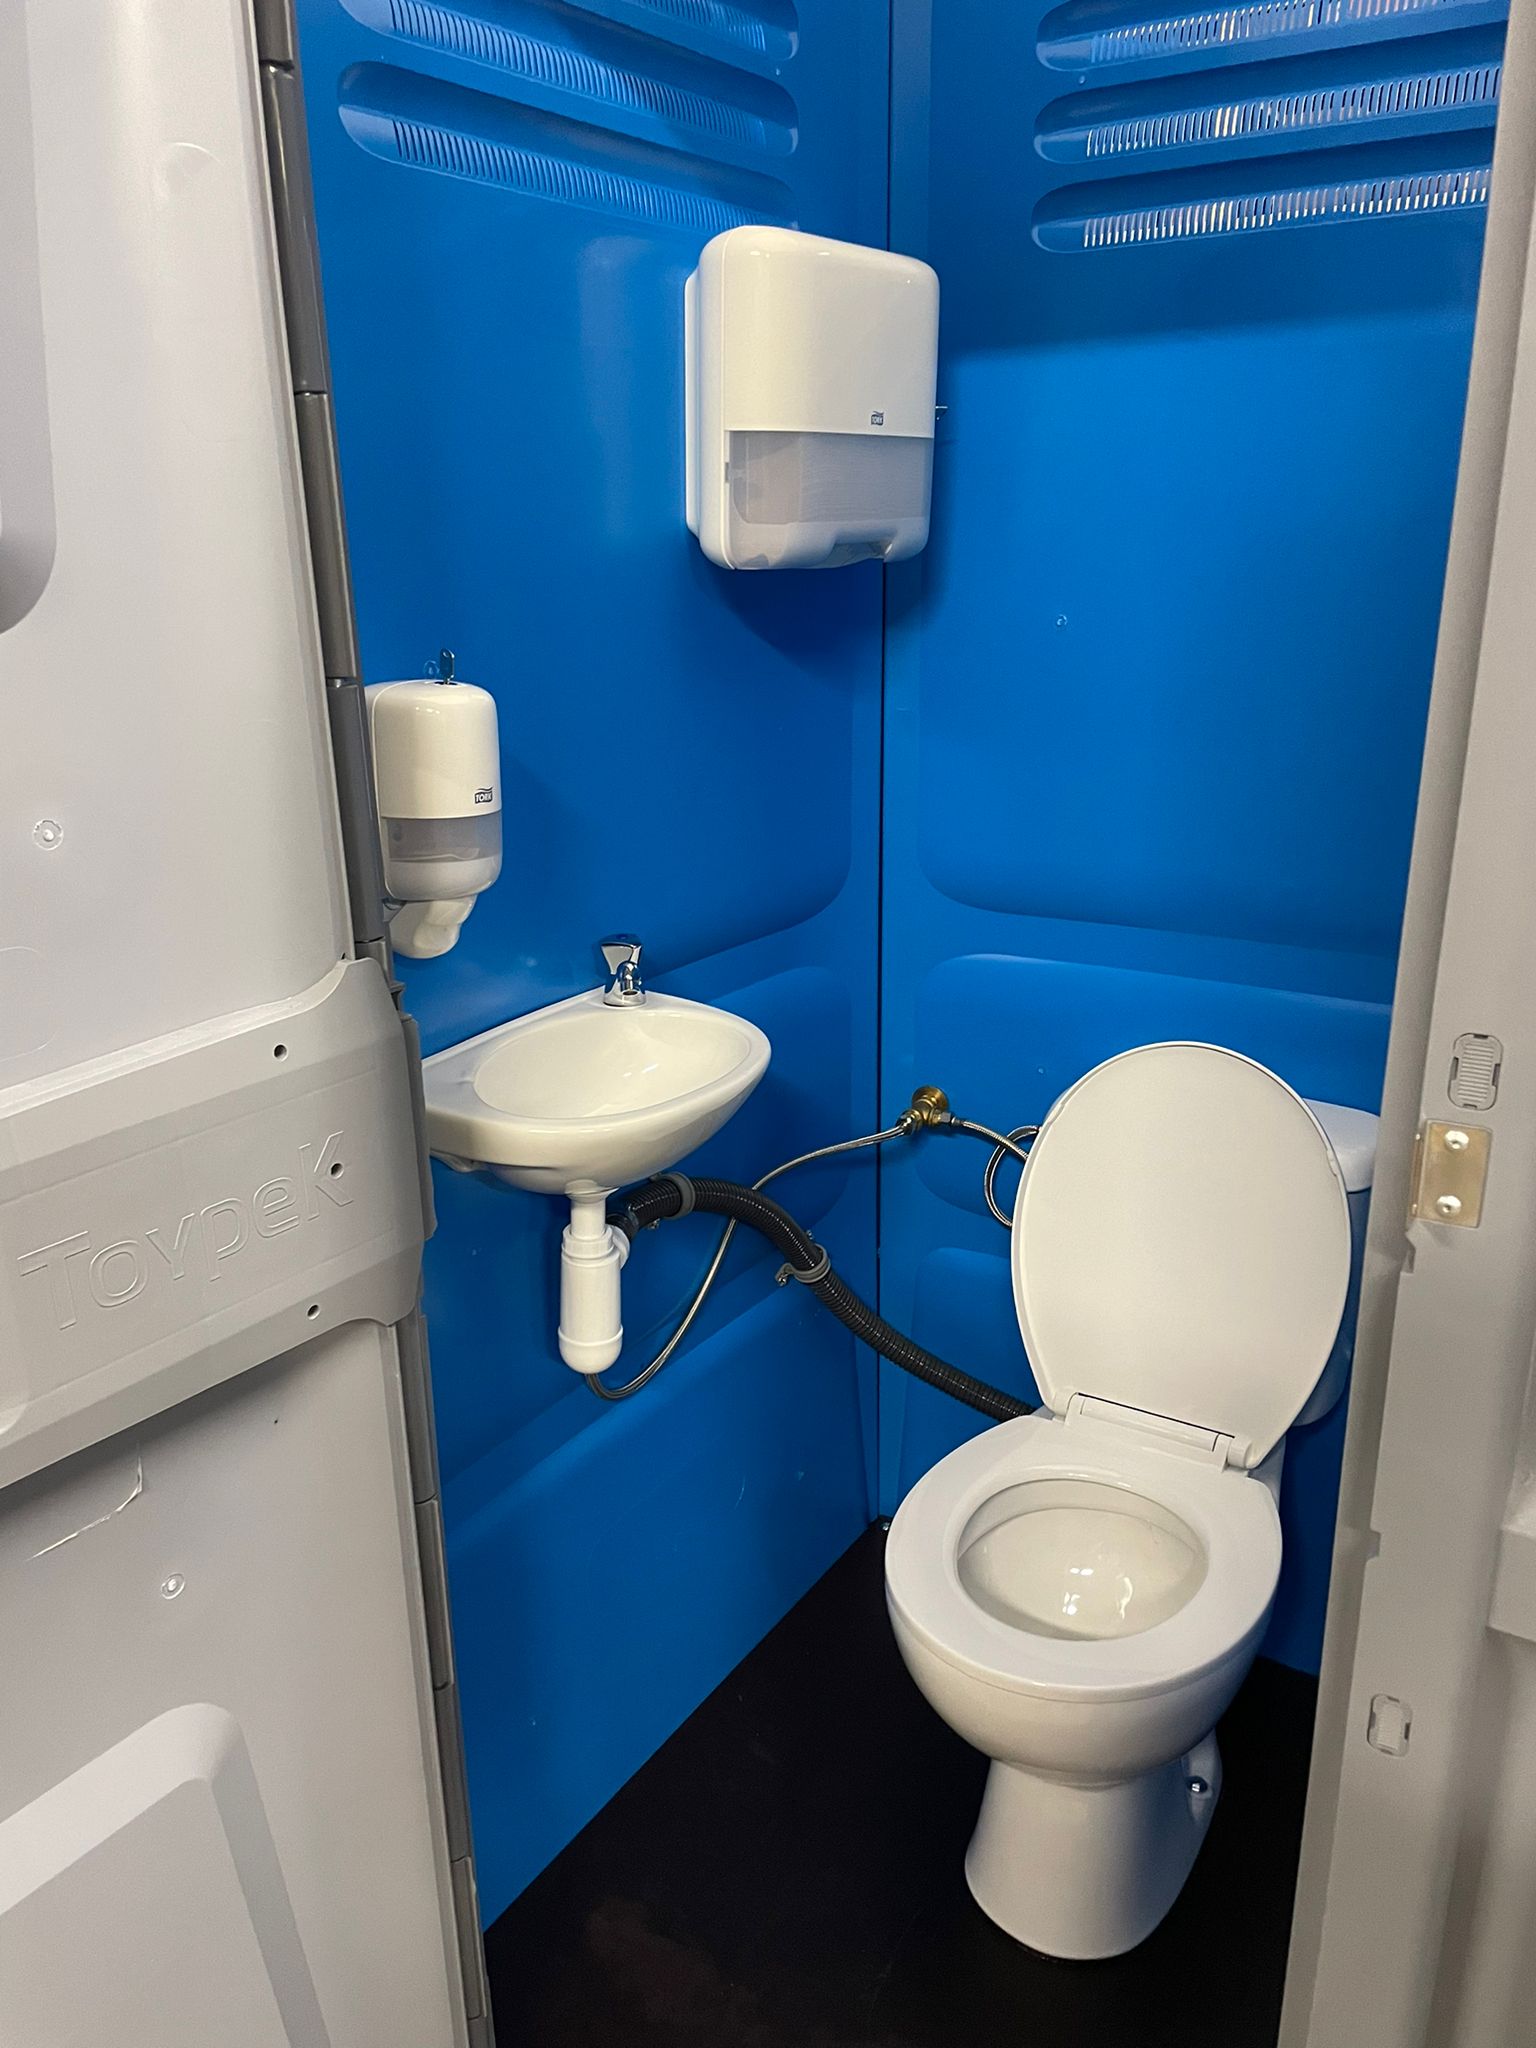 aflevering camera precedent Mobiele sanitaire toilet unit kopen | MobielToiletKopen.nl